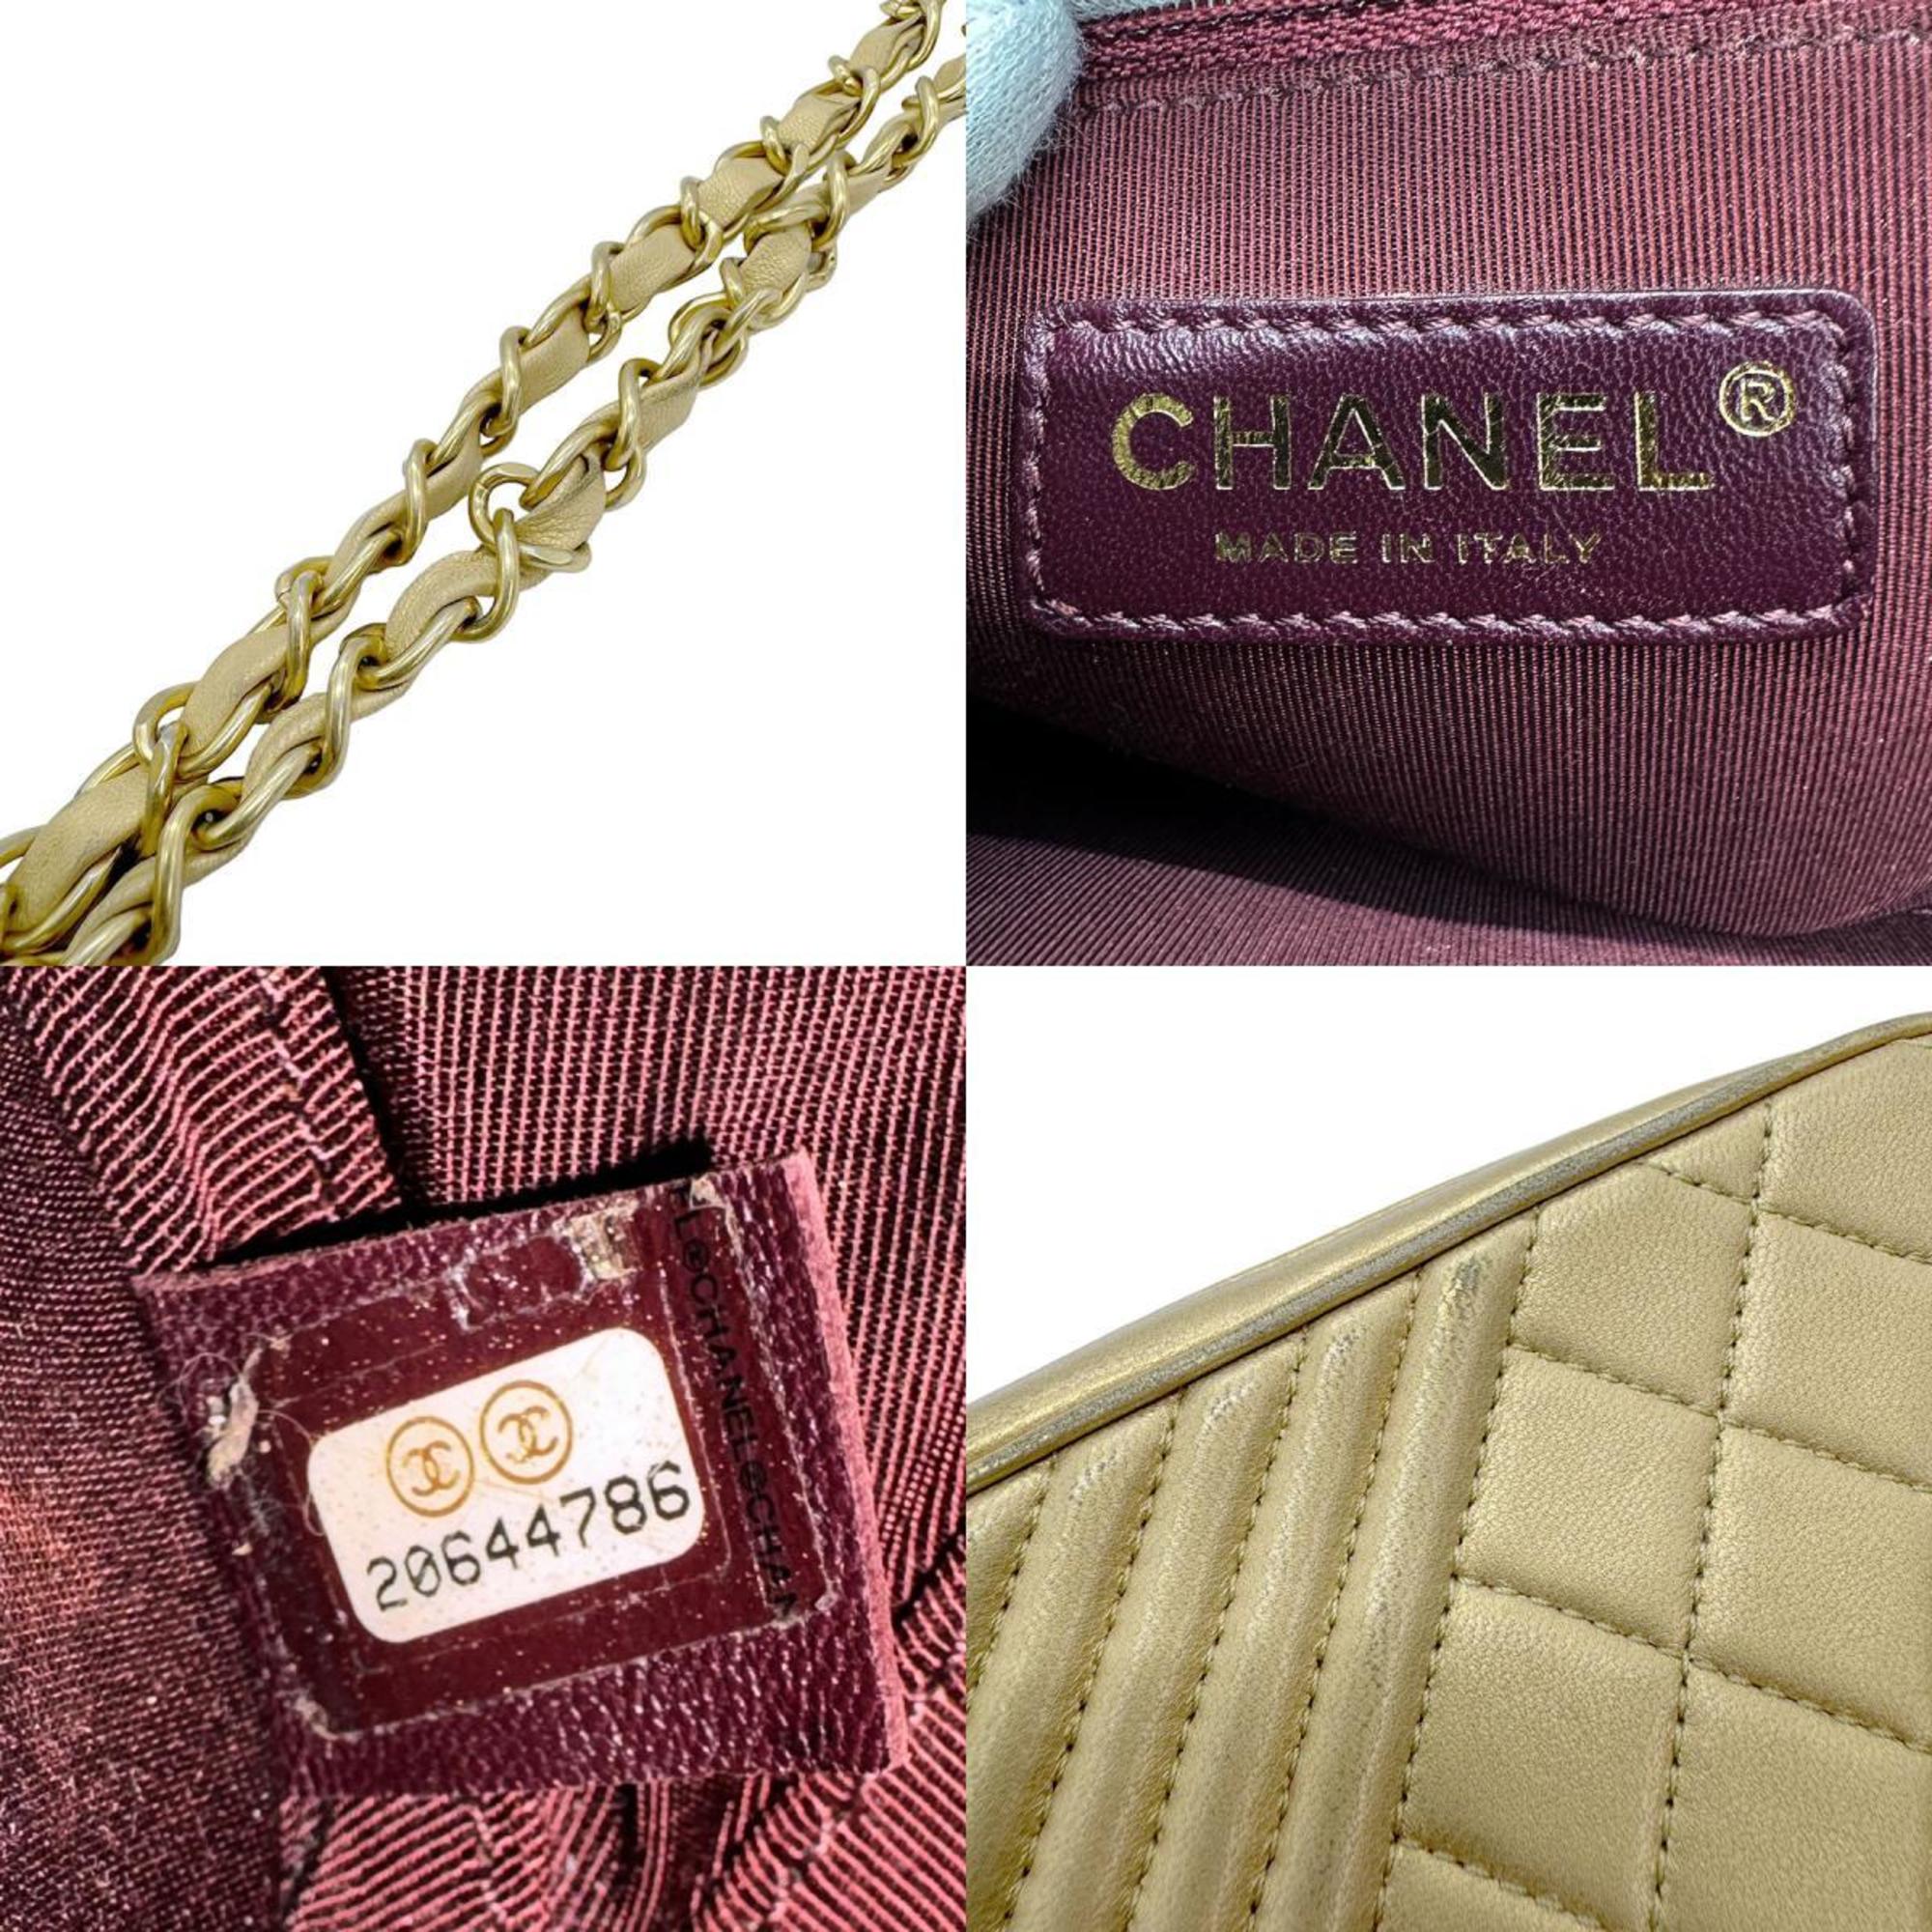 CHANEL Shoulder Bag Chain Matelasse Leather/Metal Gold Women's z0537